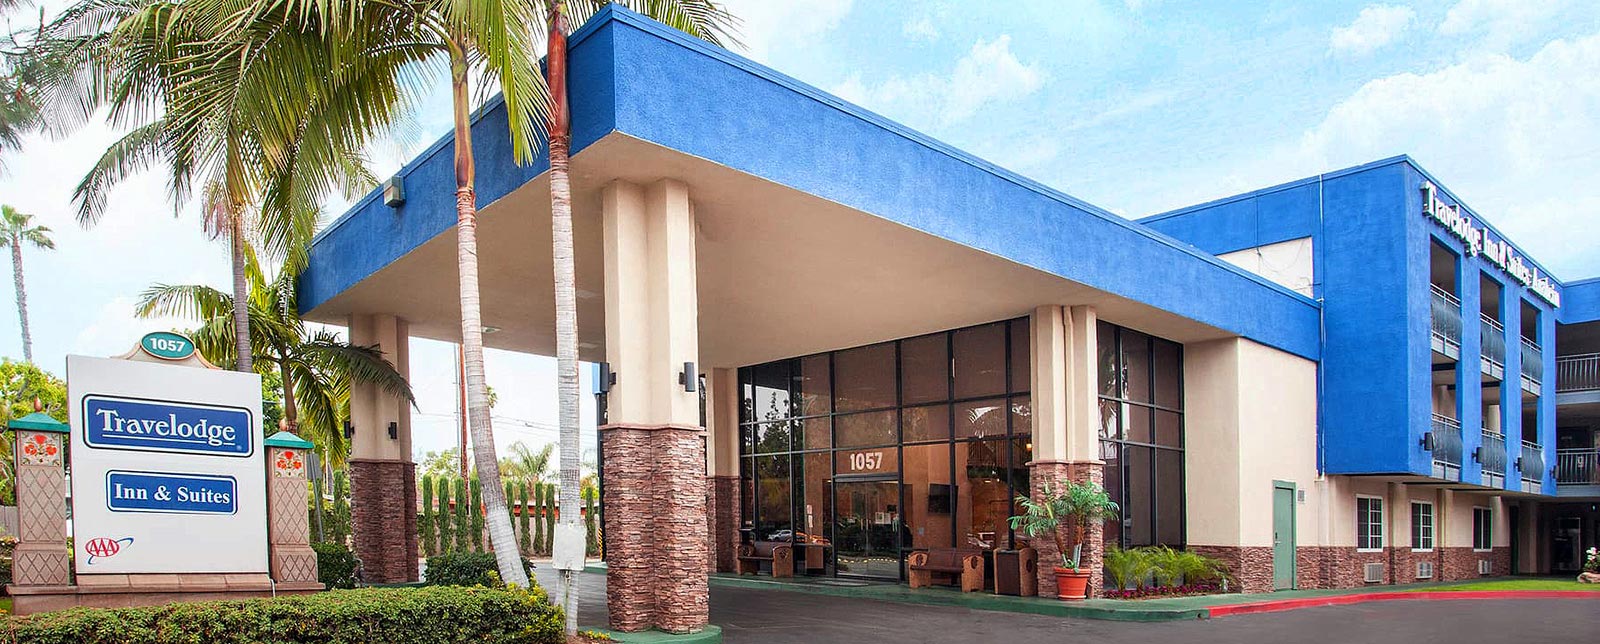 Travelodge Anaheim Inn & Suites California